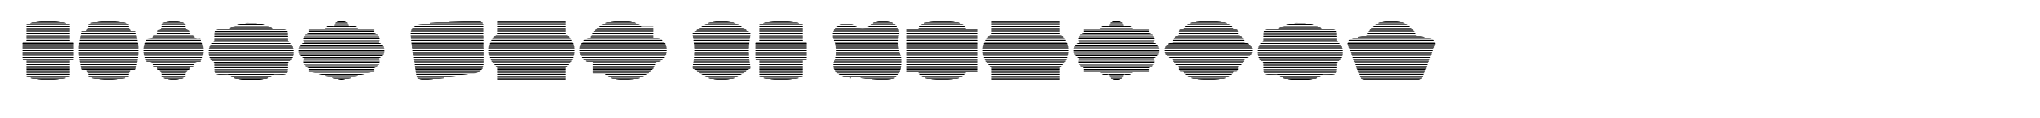 Label Pro XL Stripes image